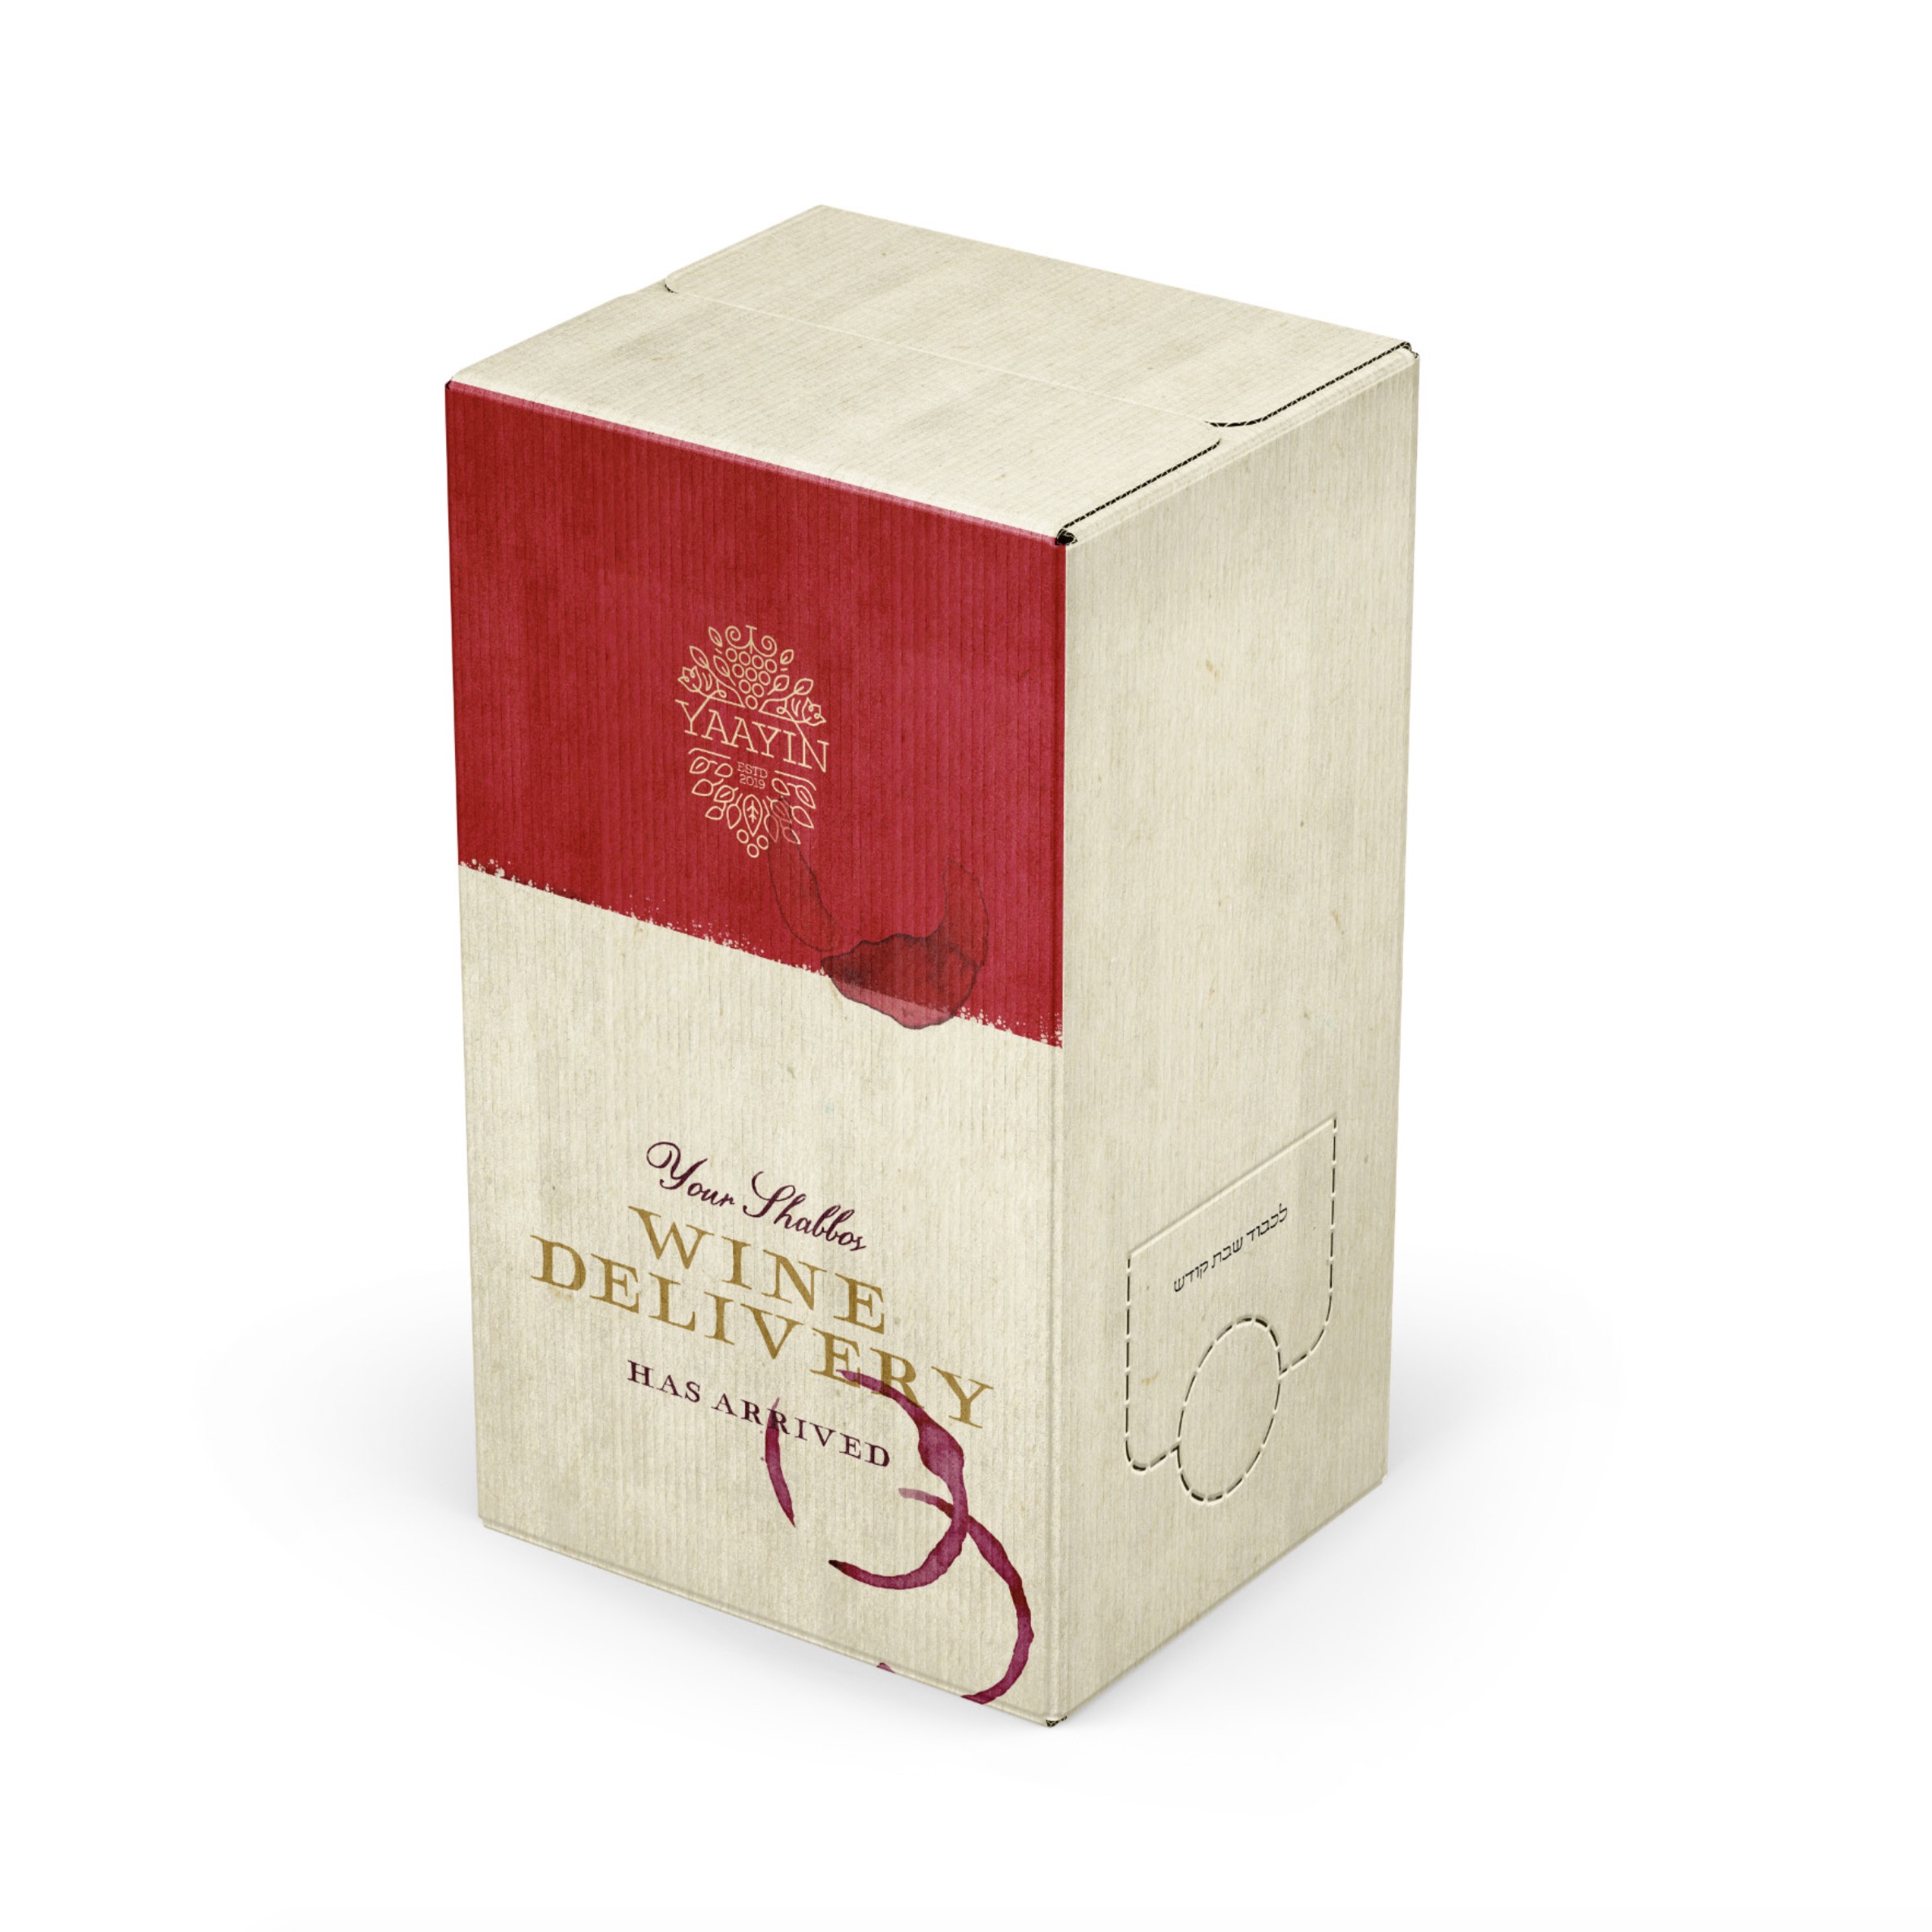 Cardboard wine delivery box.